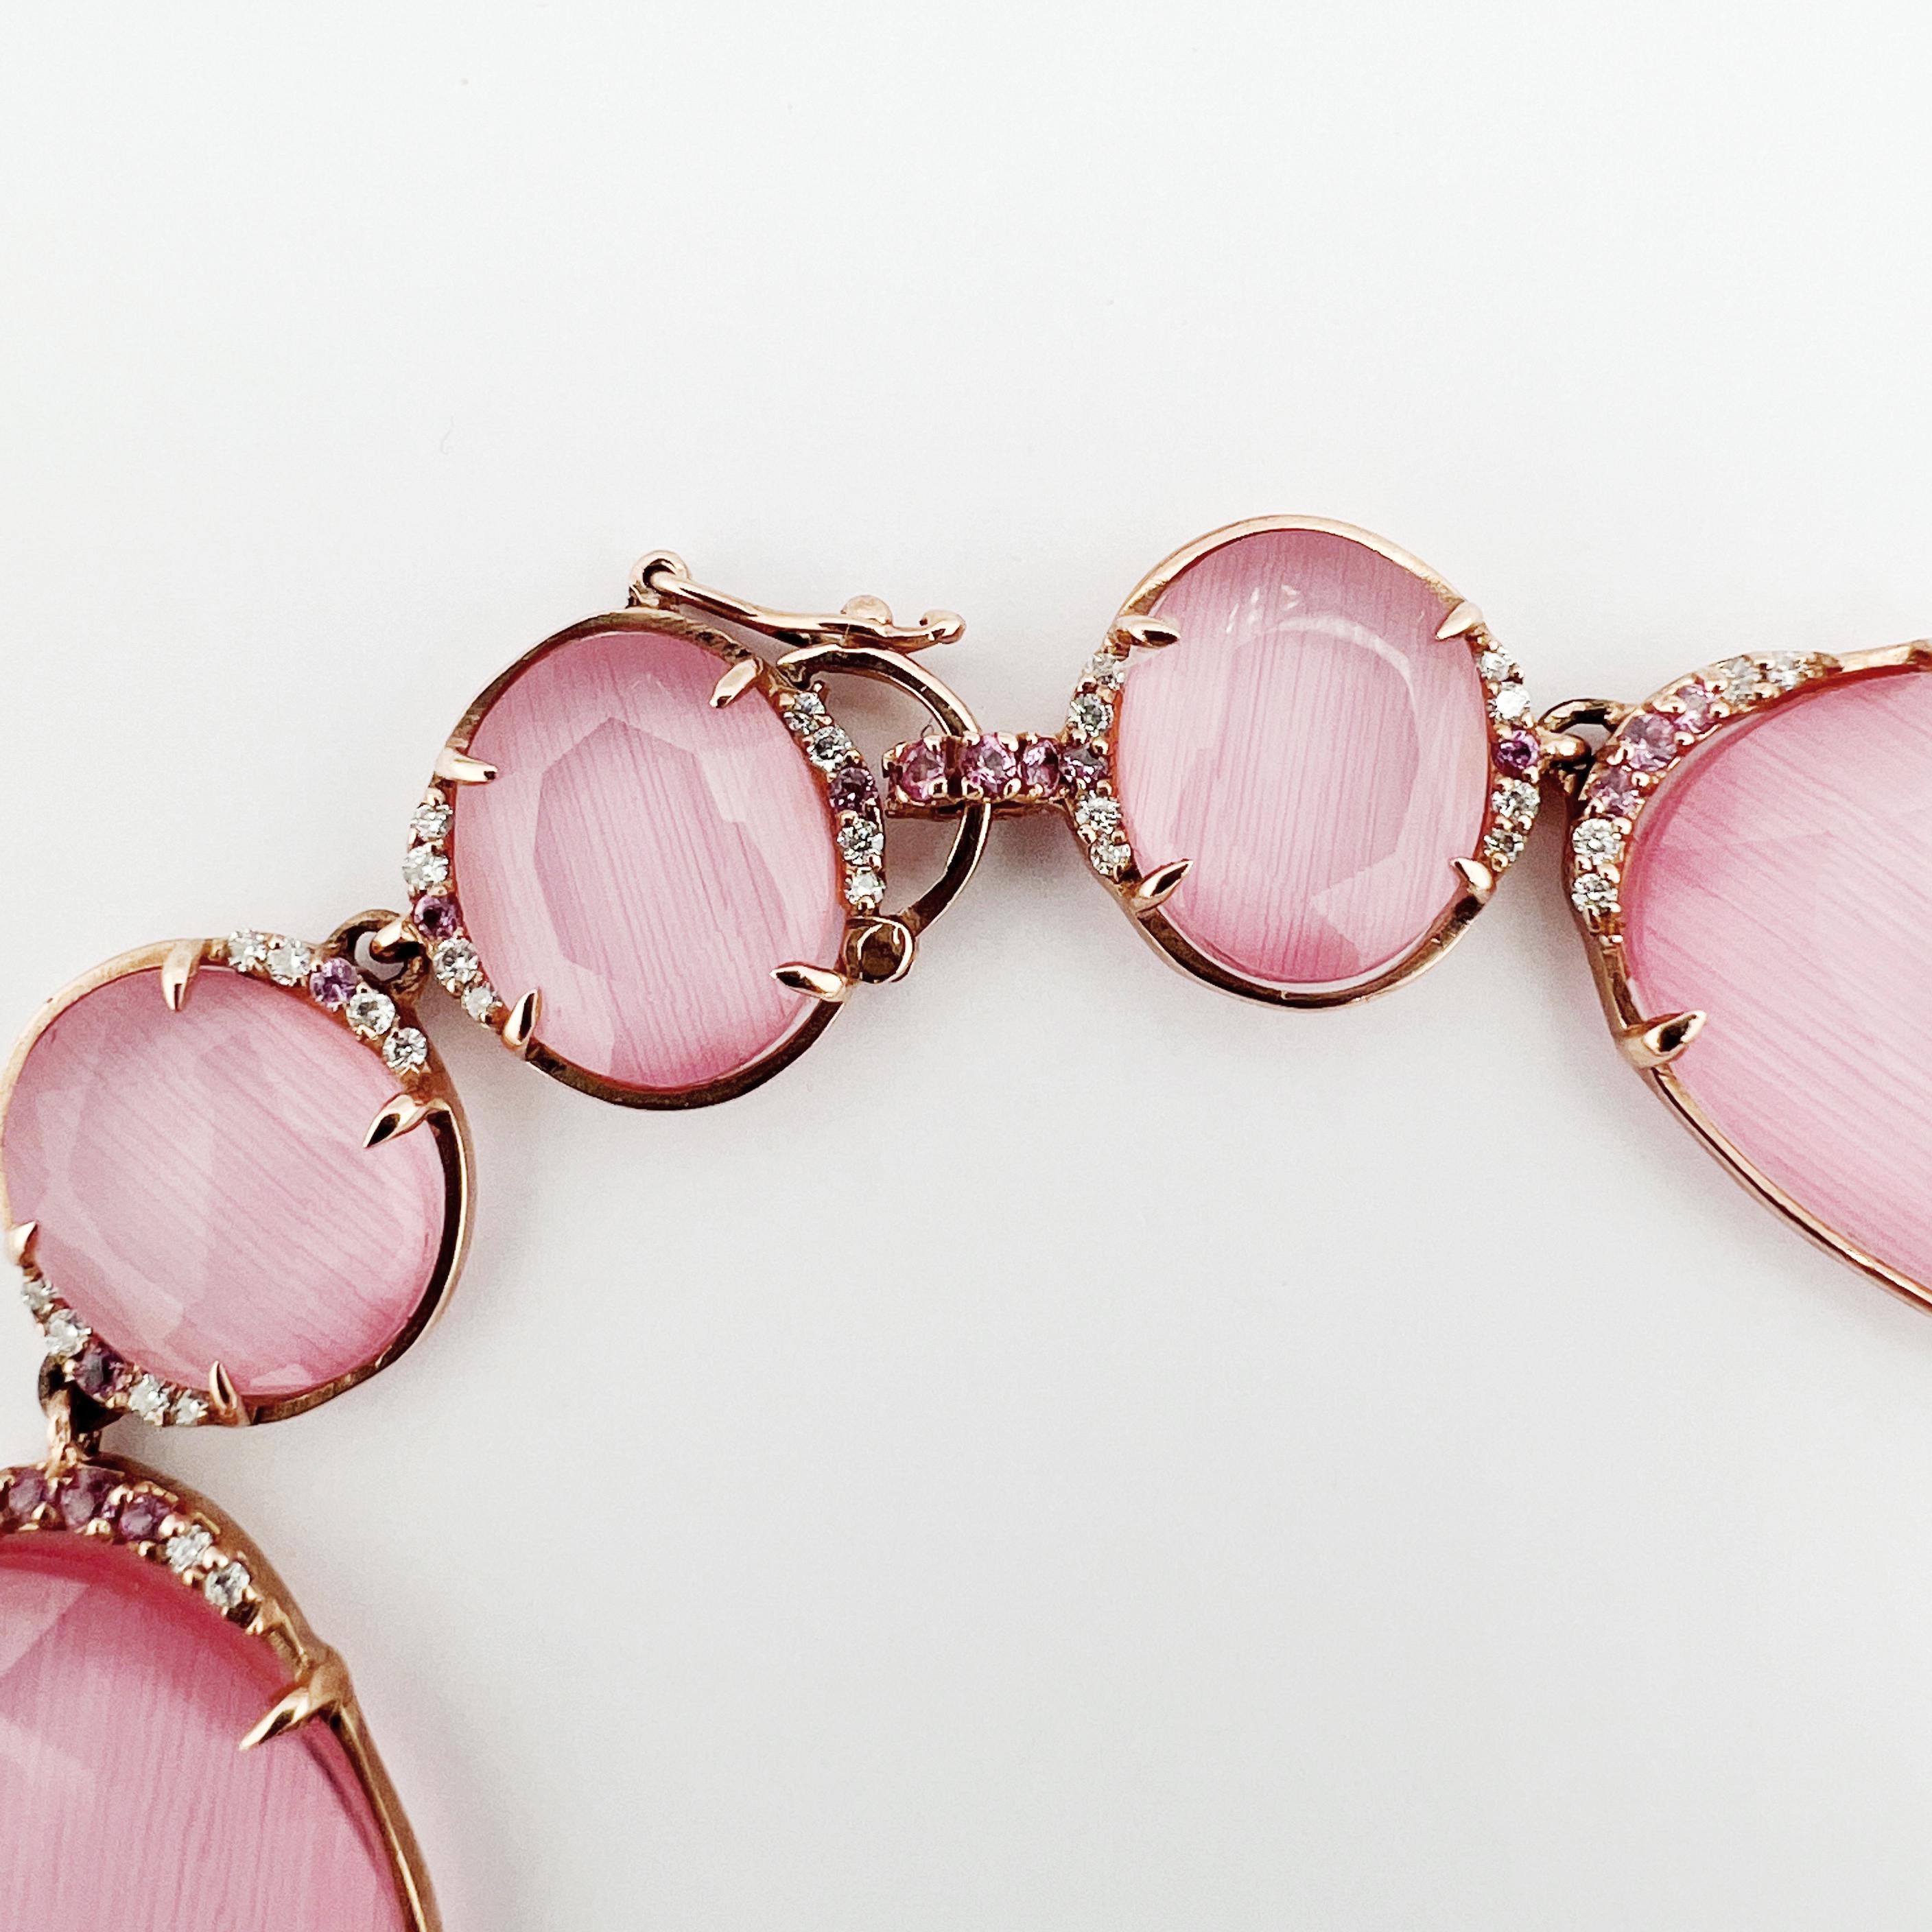 Modern 9k gold Bracelet in doublets (rock crystal & fiber) in pink sapphires & diamonds For Sale